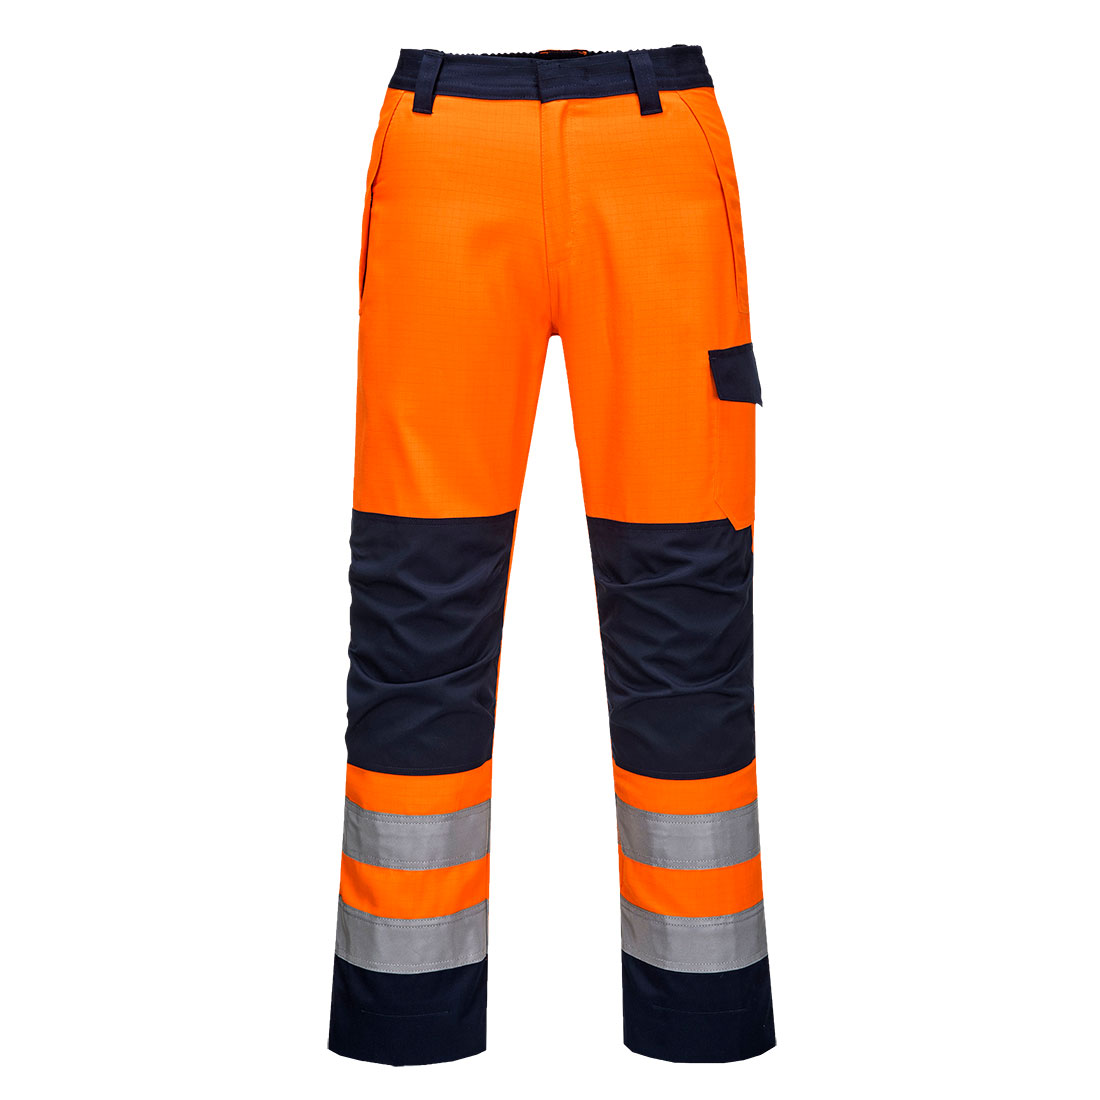 Modaflame RIS Orange/Navy Trousers